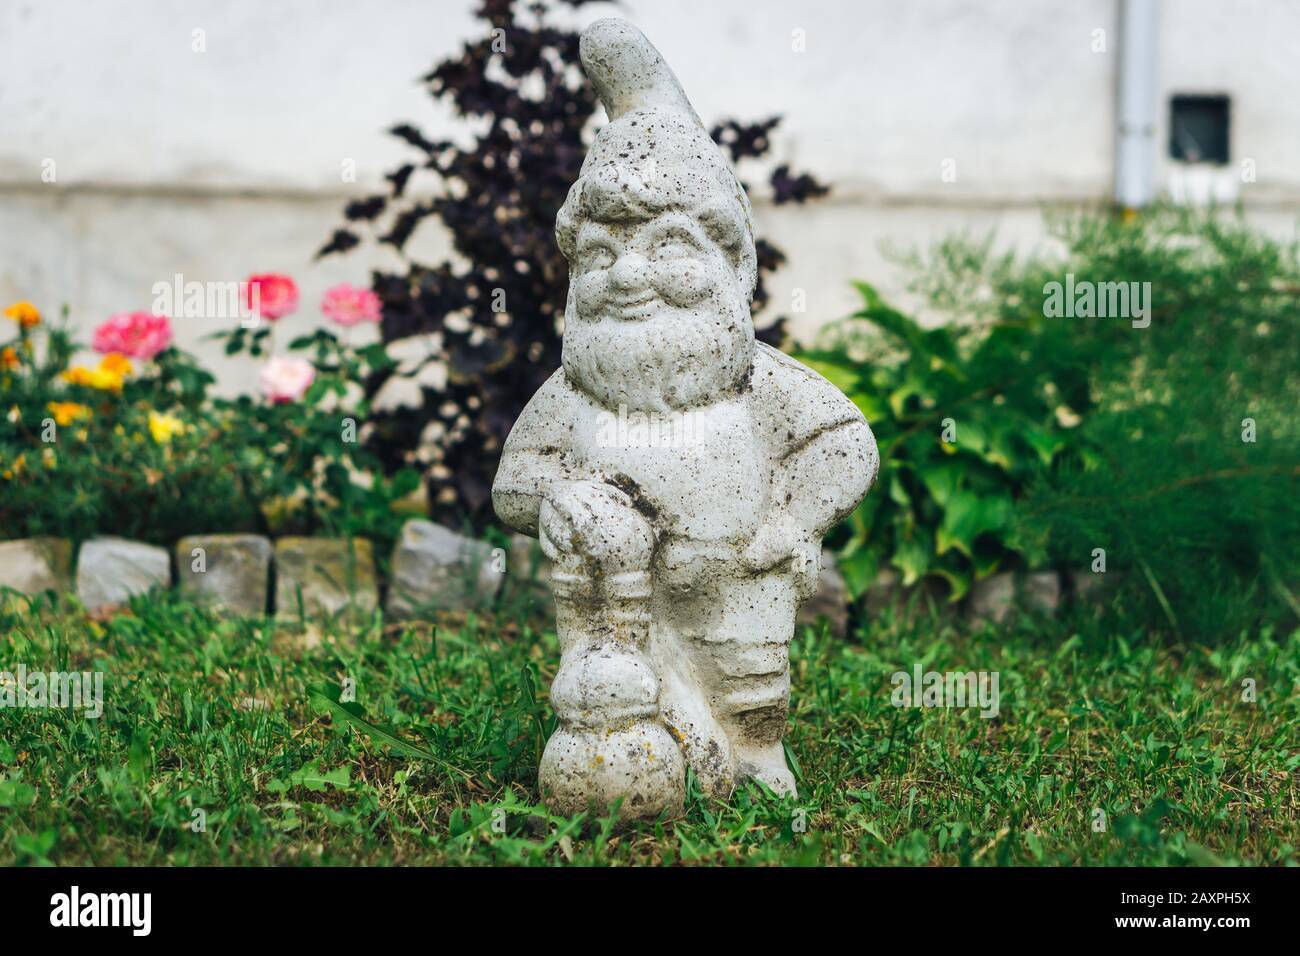 Small dwarf statue in backyard Stock Photo